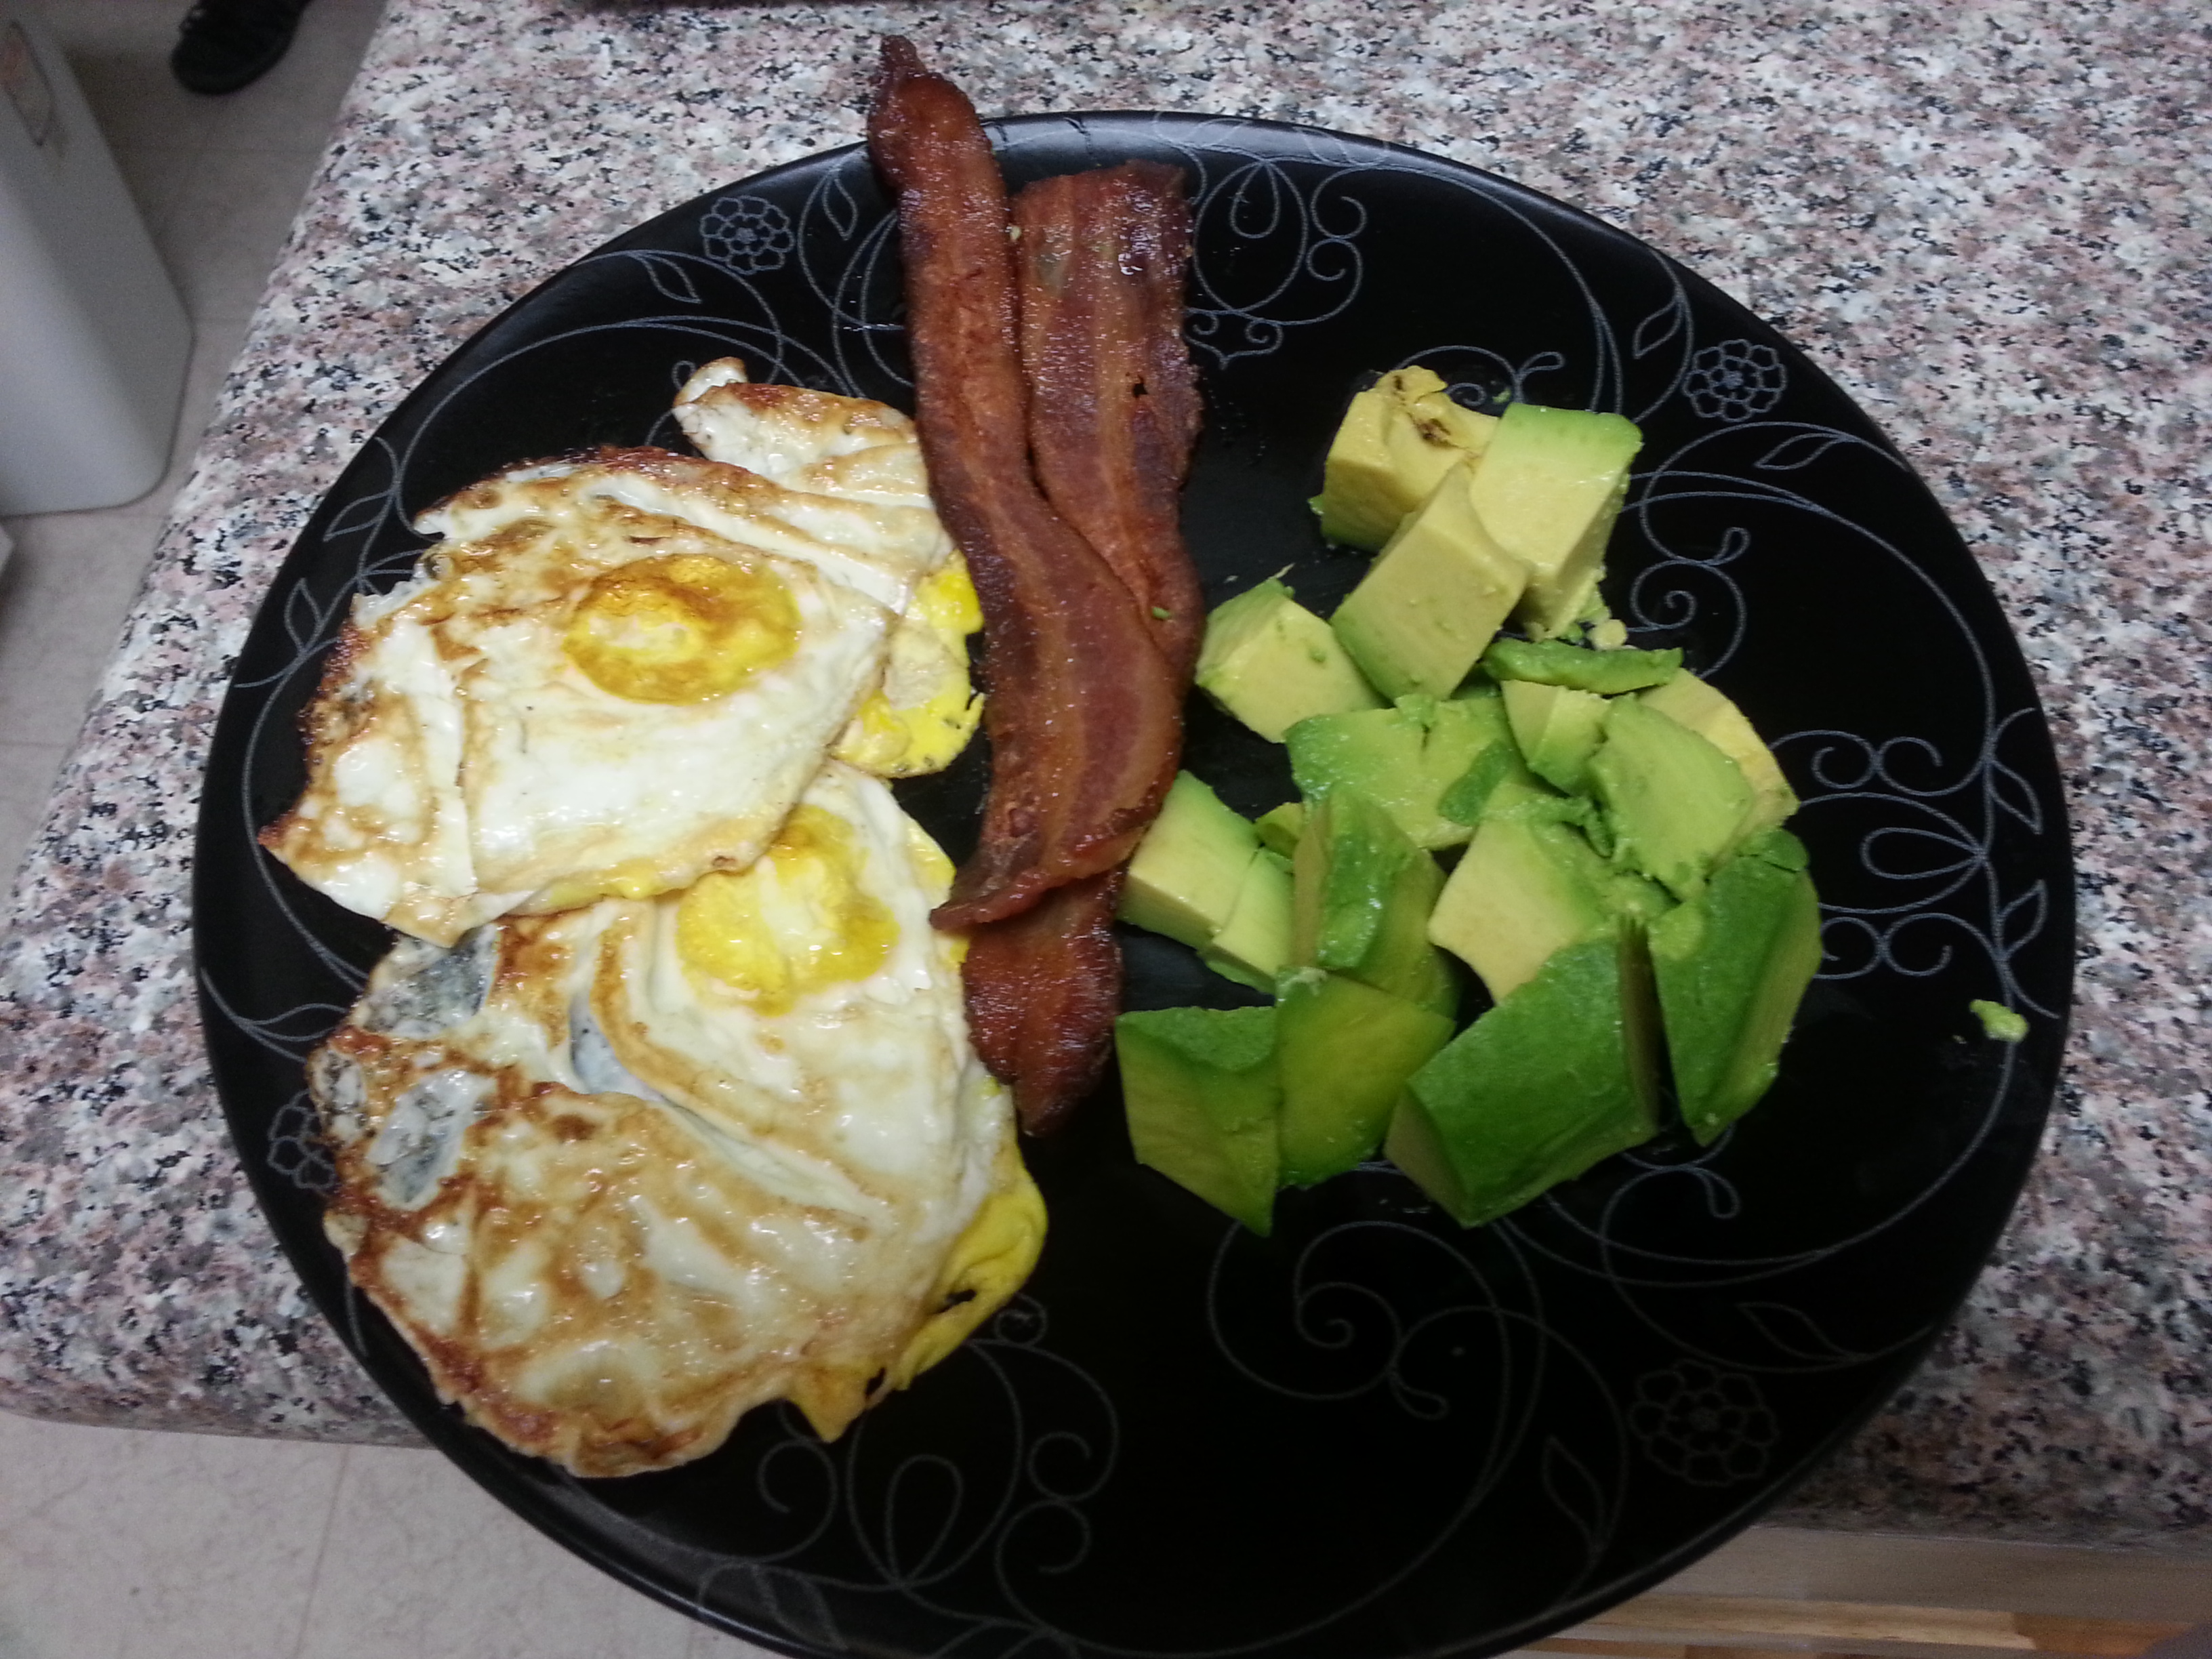 The amazingly delicious pre-ride breakfast: avocado, bacon and fried eggs!